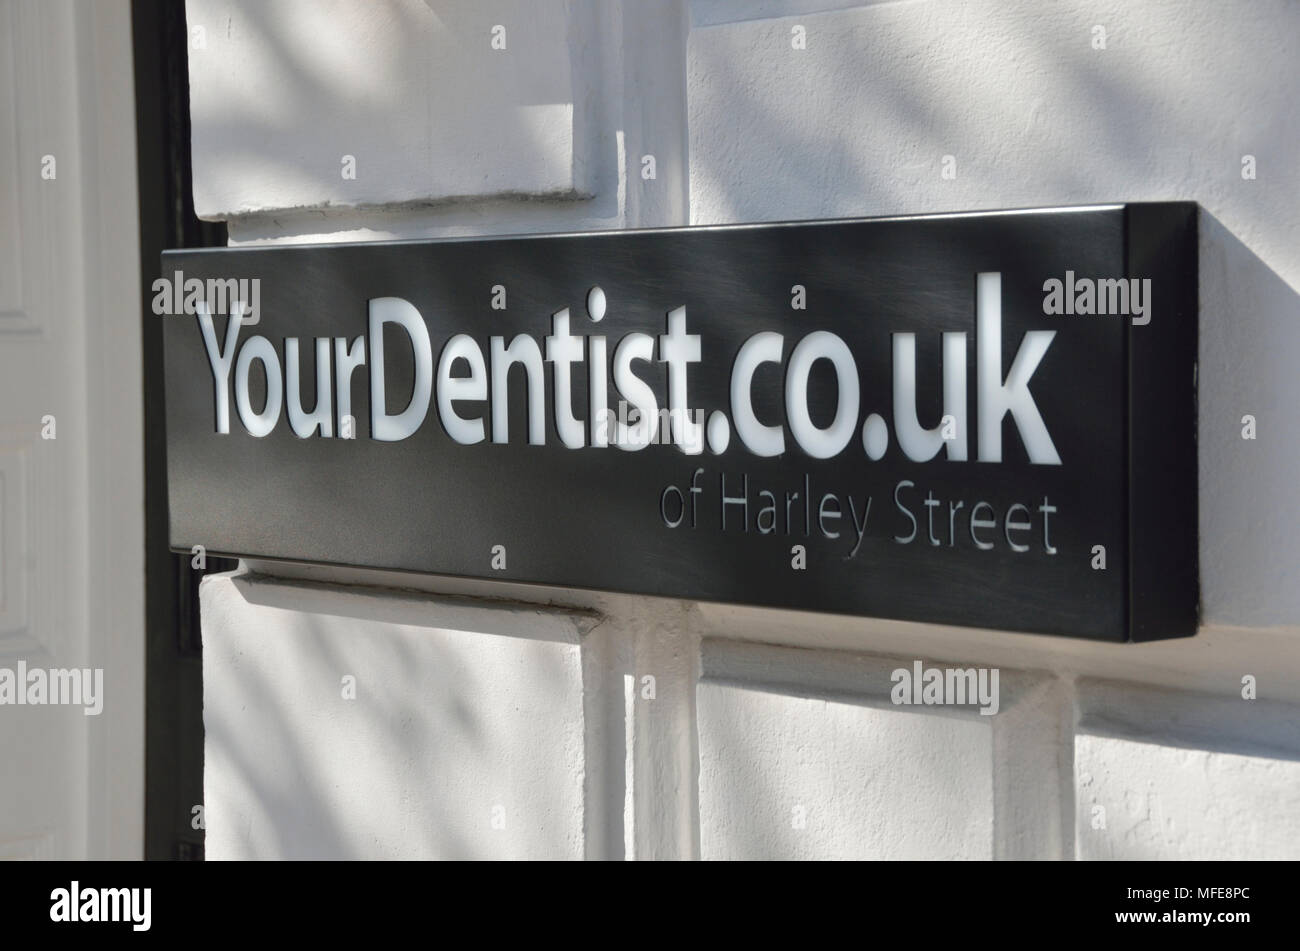 YourDentist.co.uk dentist, of Harley Street, Marylebone, London, UK. Stock Photo